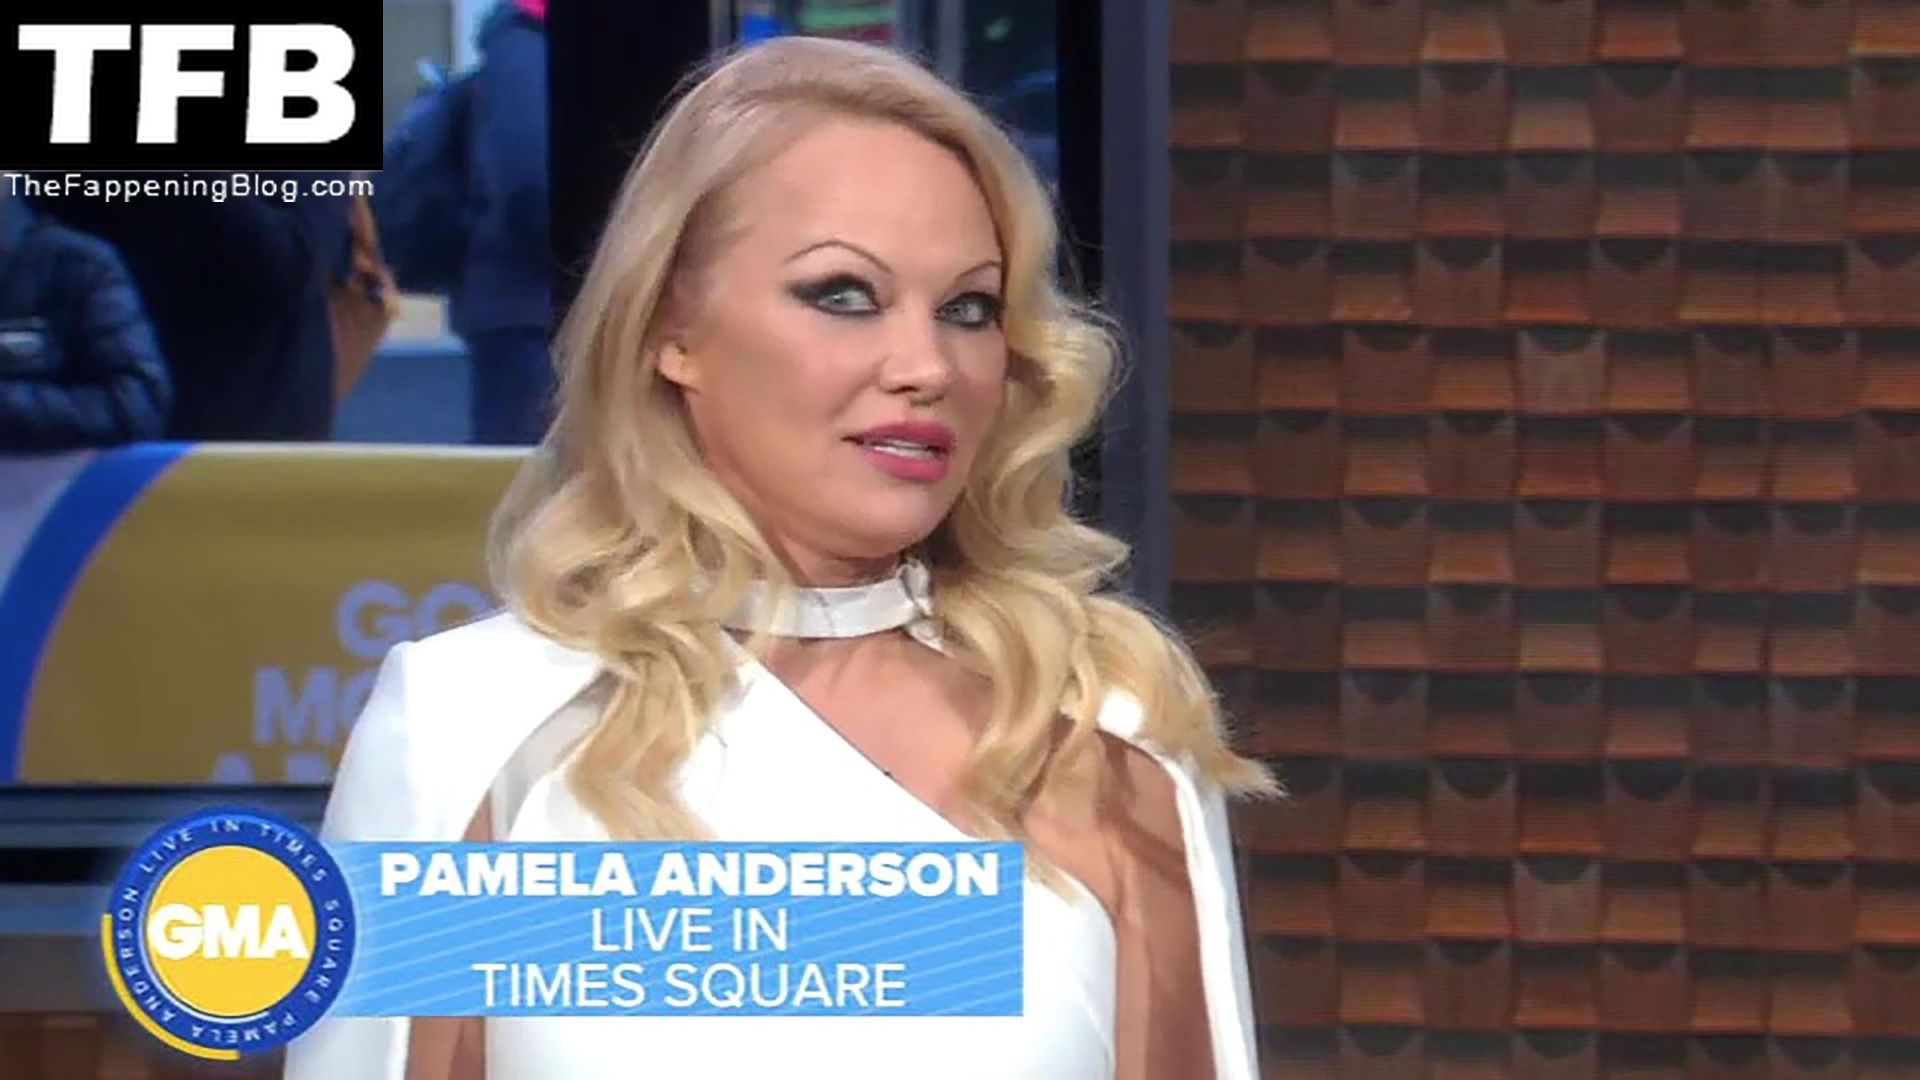 Pamela-Anderson-Hot-The-Fappening-Blog-21.jpg